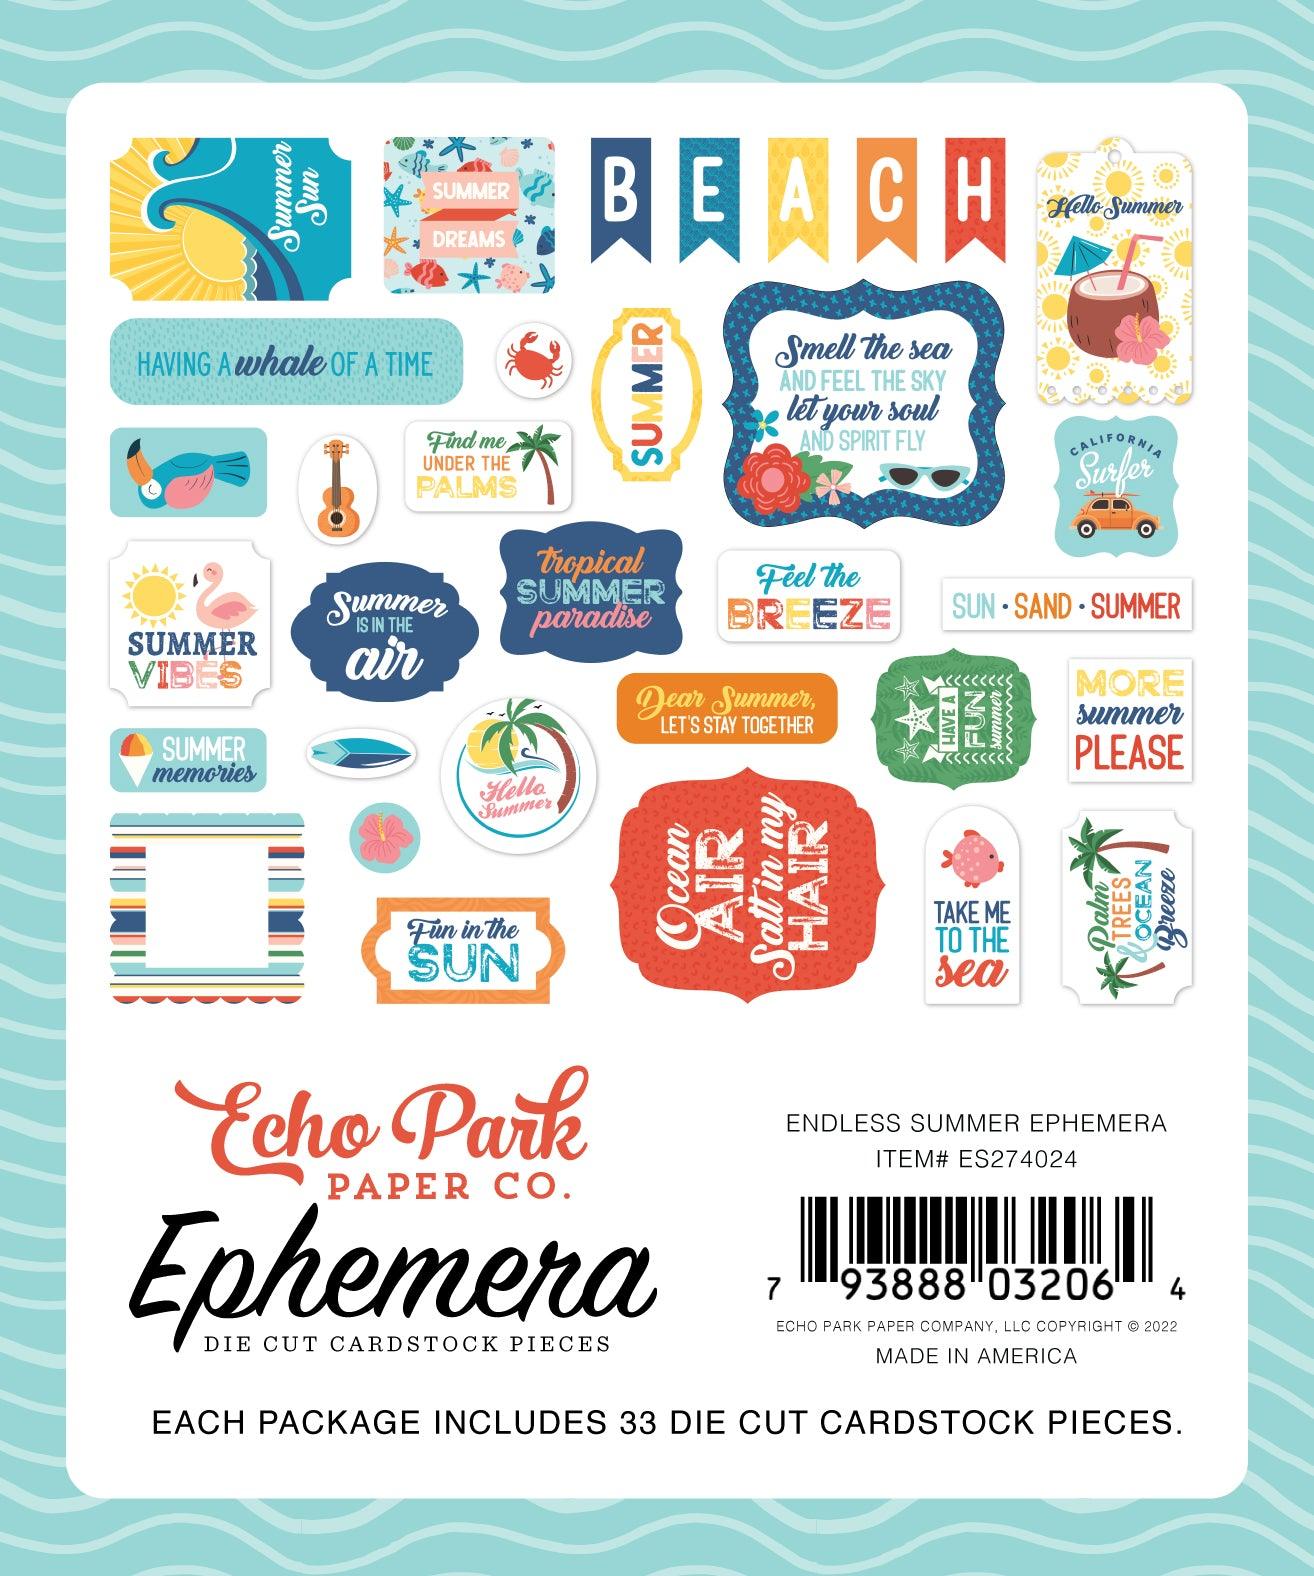 Endless Summer Collection 5 x 5 Scrapbook Ephemera Die Cuts by Echo Park Paper - Scrapbook Supply Companies